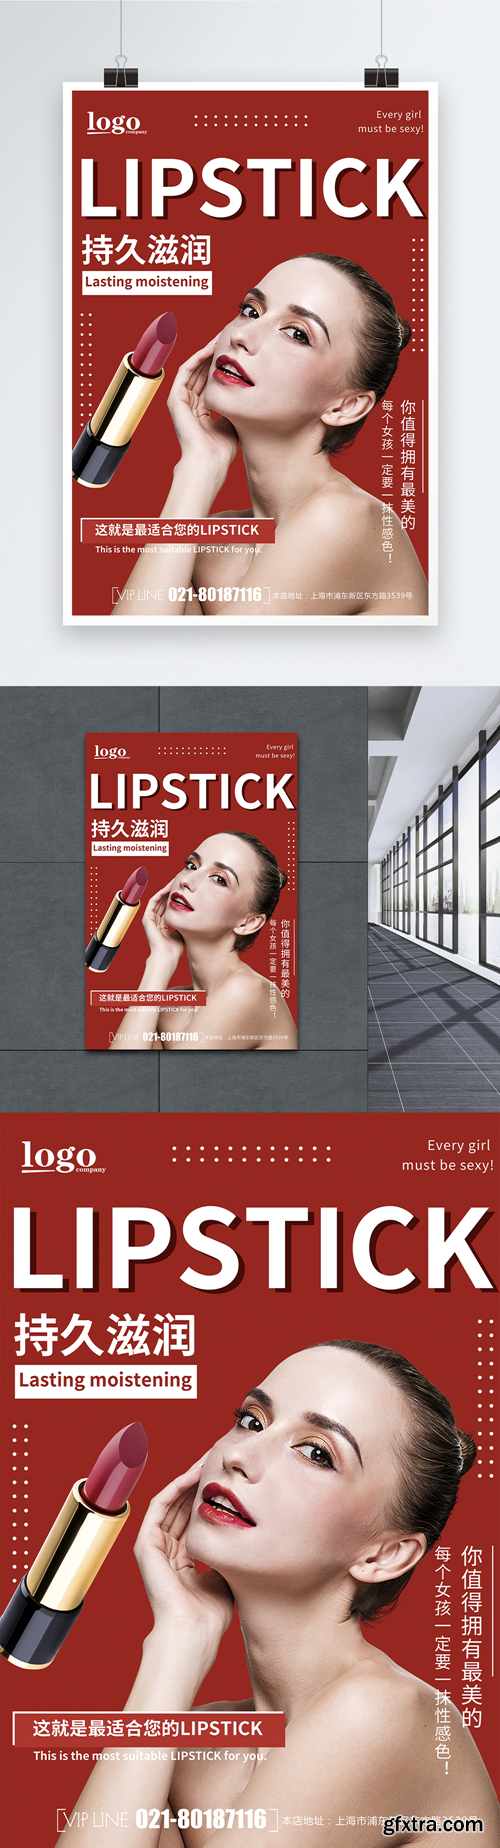 elegant and elegant lipstick poster